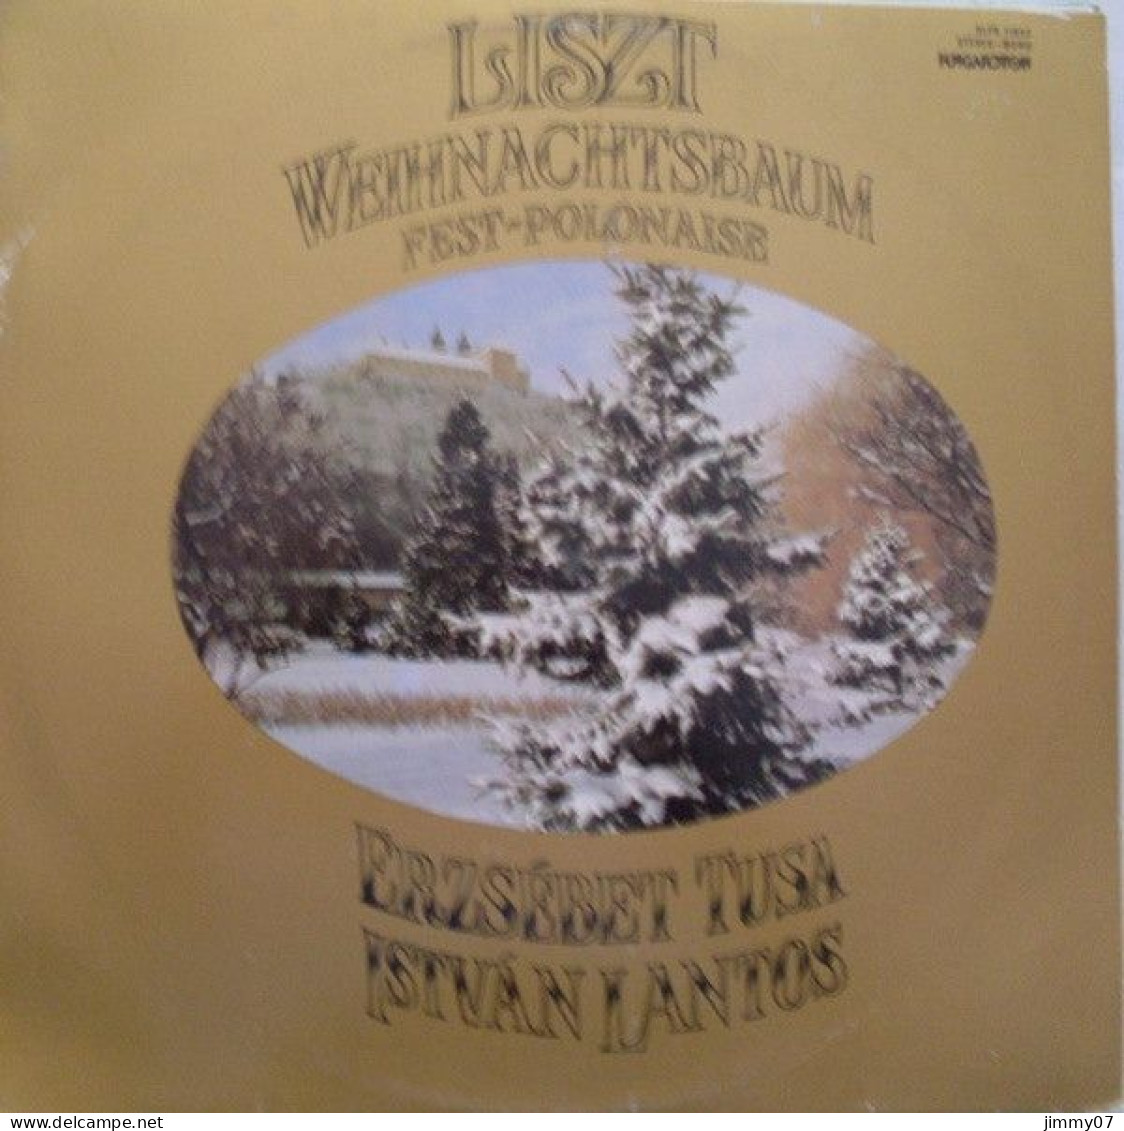 Franz Liszt, Erzsébet Tusa*, István Lantos* - Weihnachtsbaum - Fest-Polonaise (LP, Album) - Classical